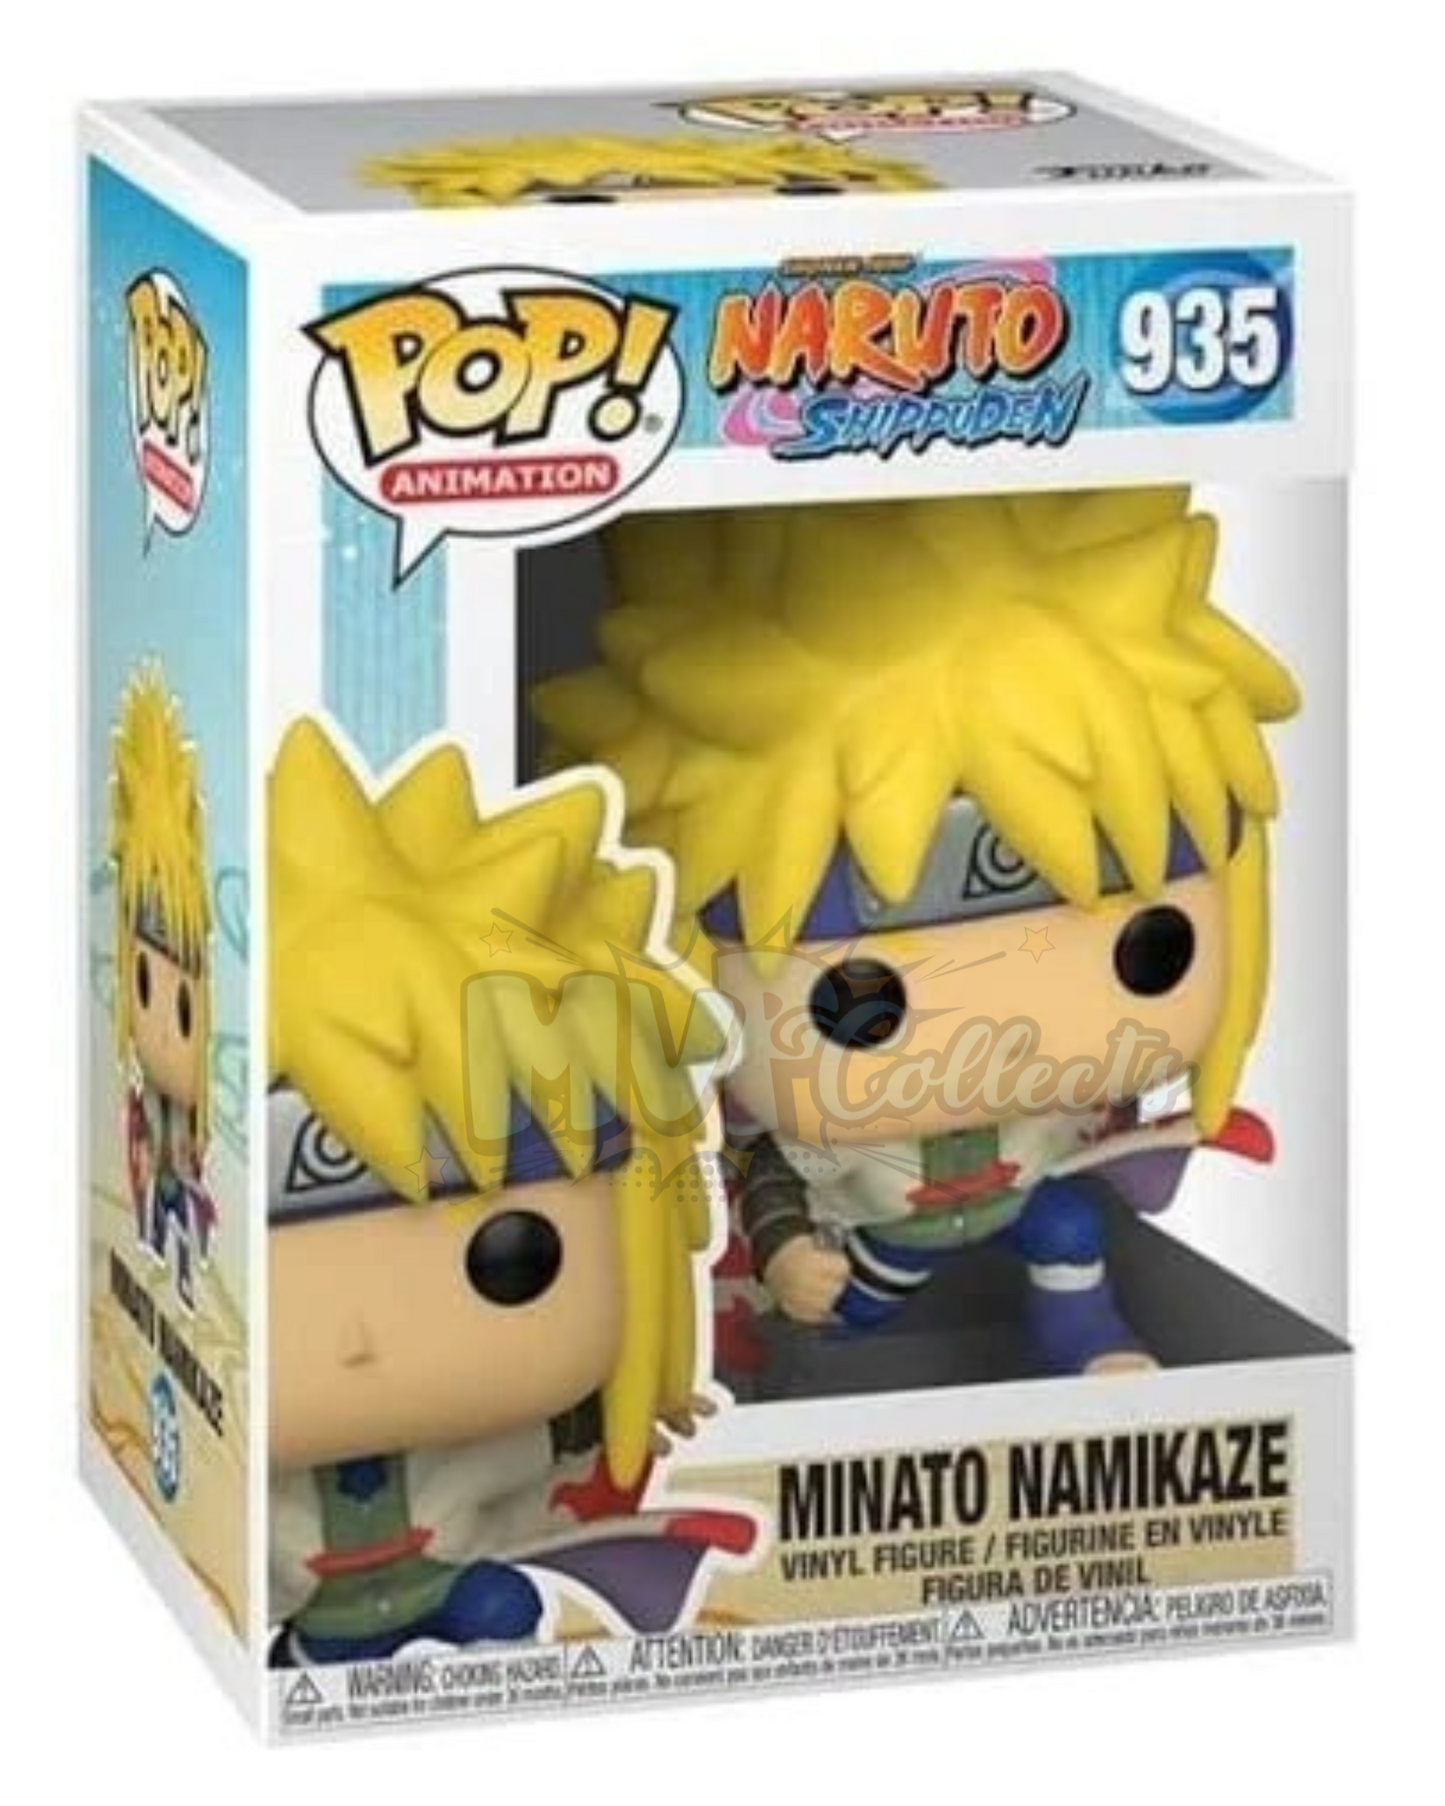 Minato POP! (Naruto) 935